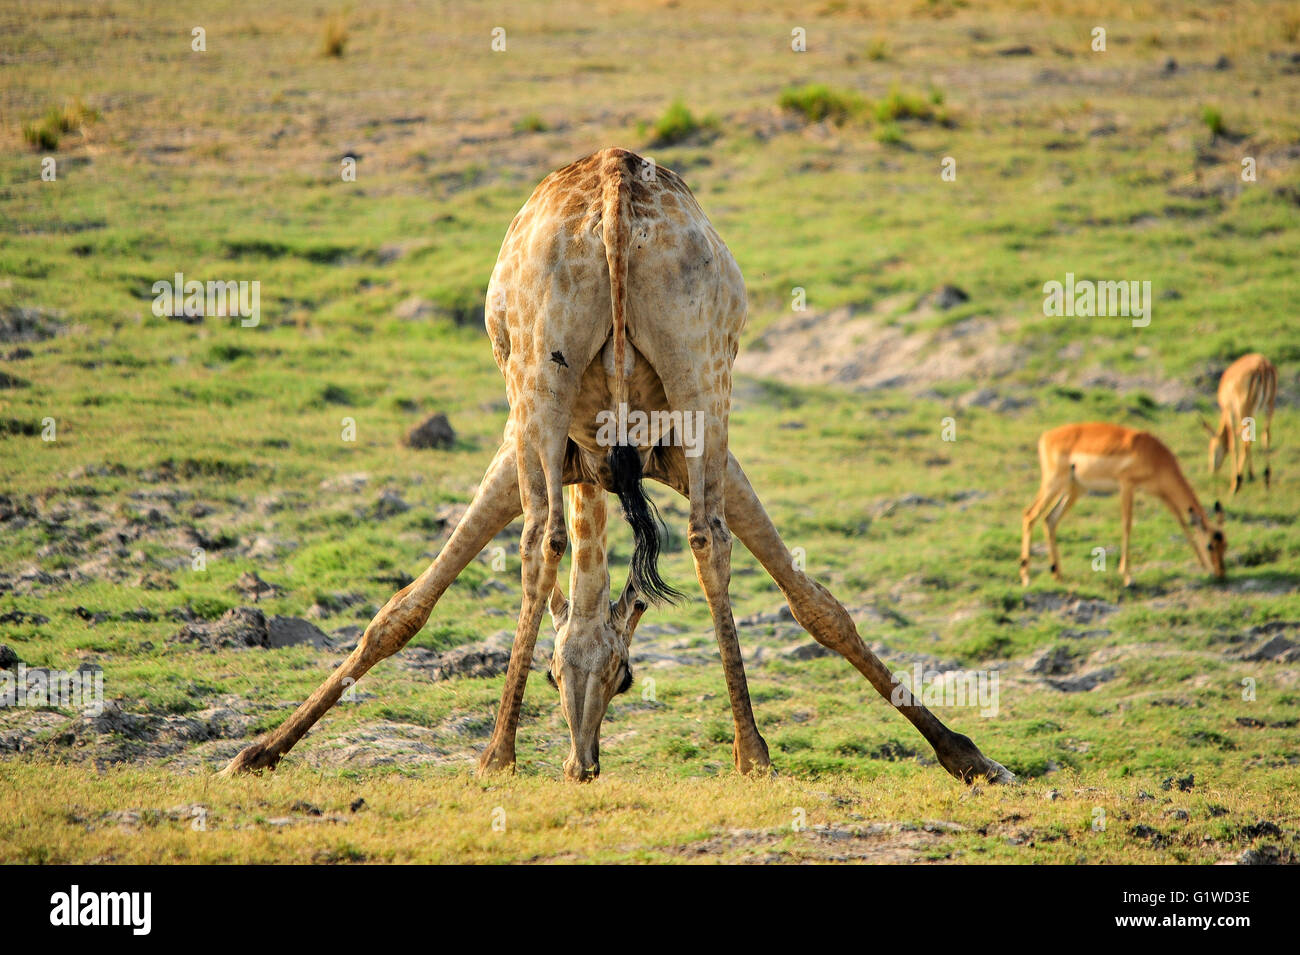 Giraffe of the Plains of Africa Stock Photo